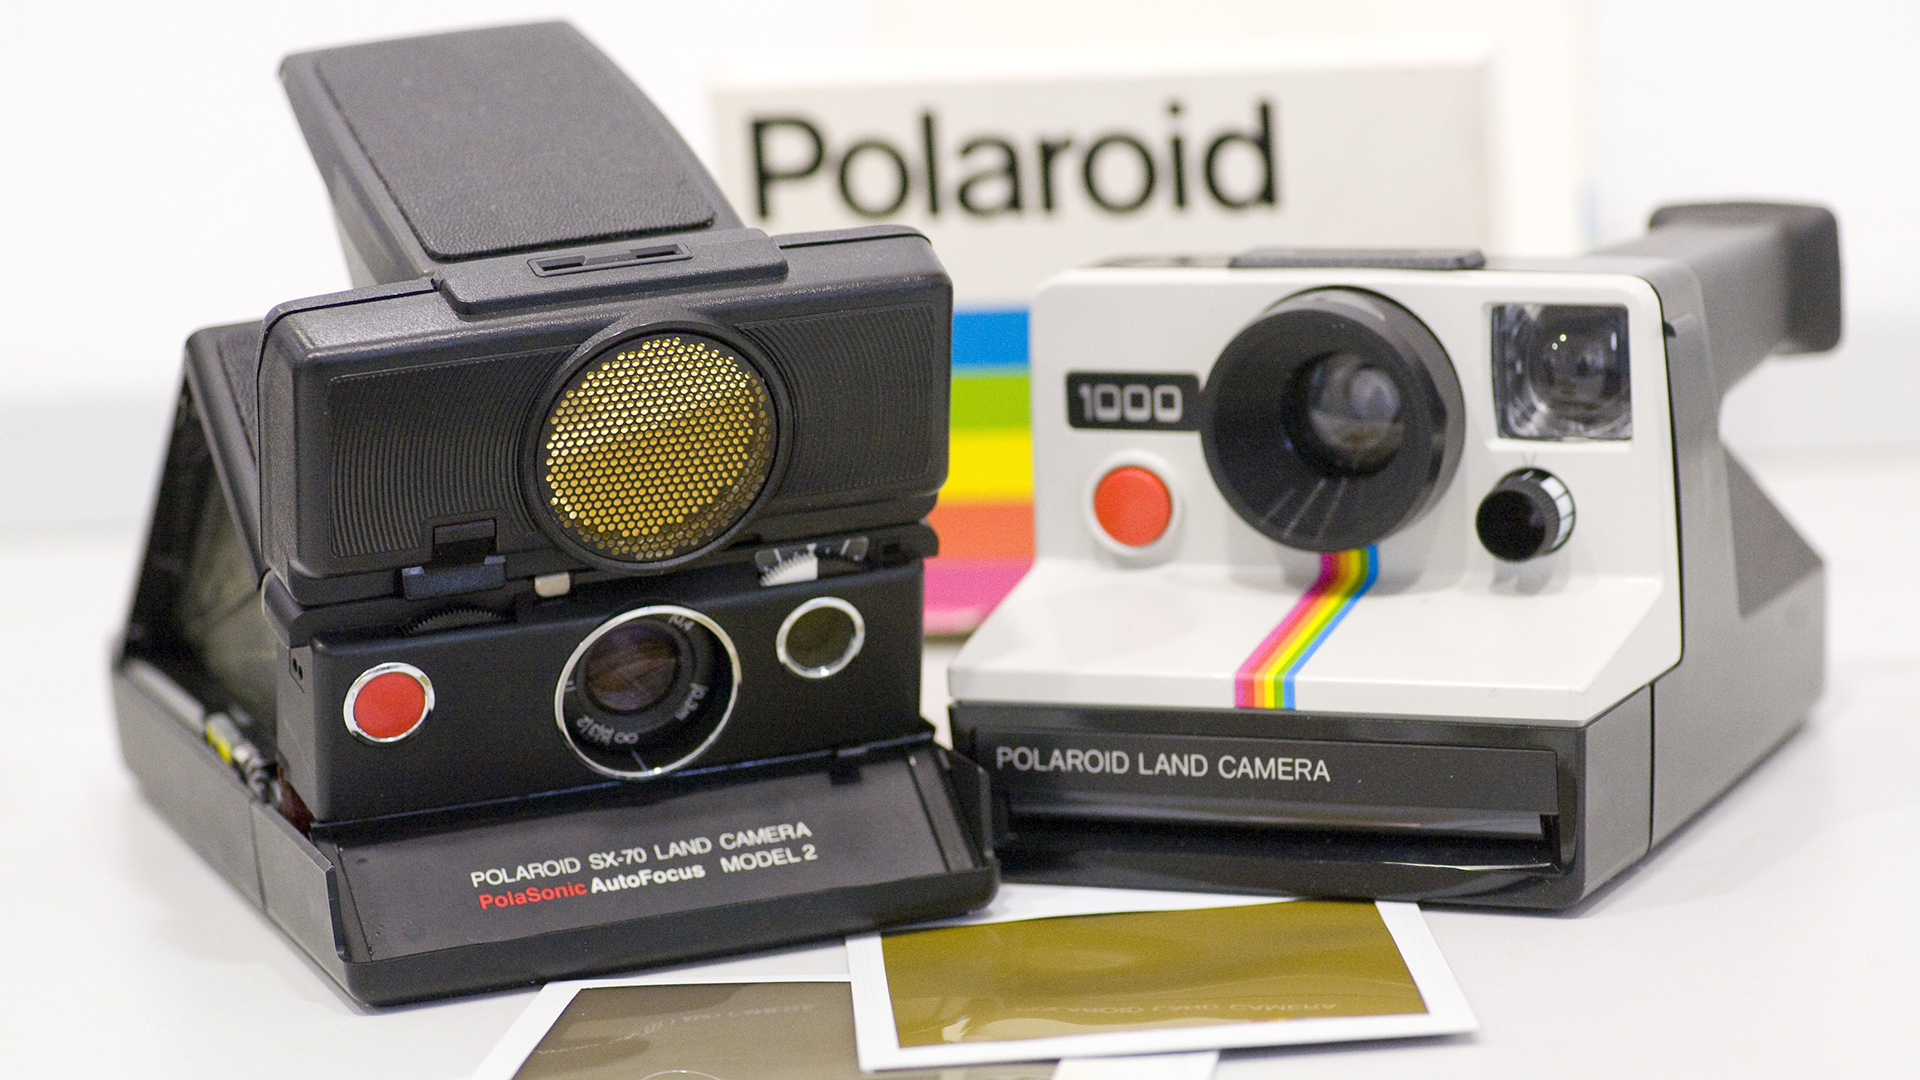 Polaroid-Kameras | picture-alliance/ dpa